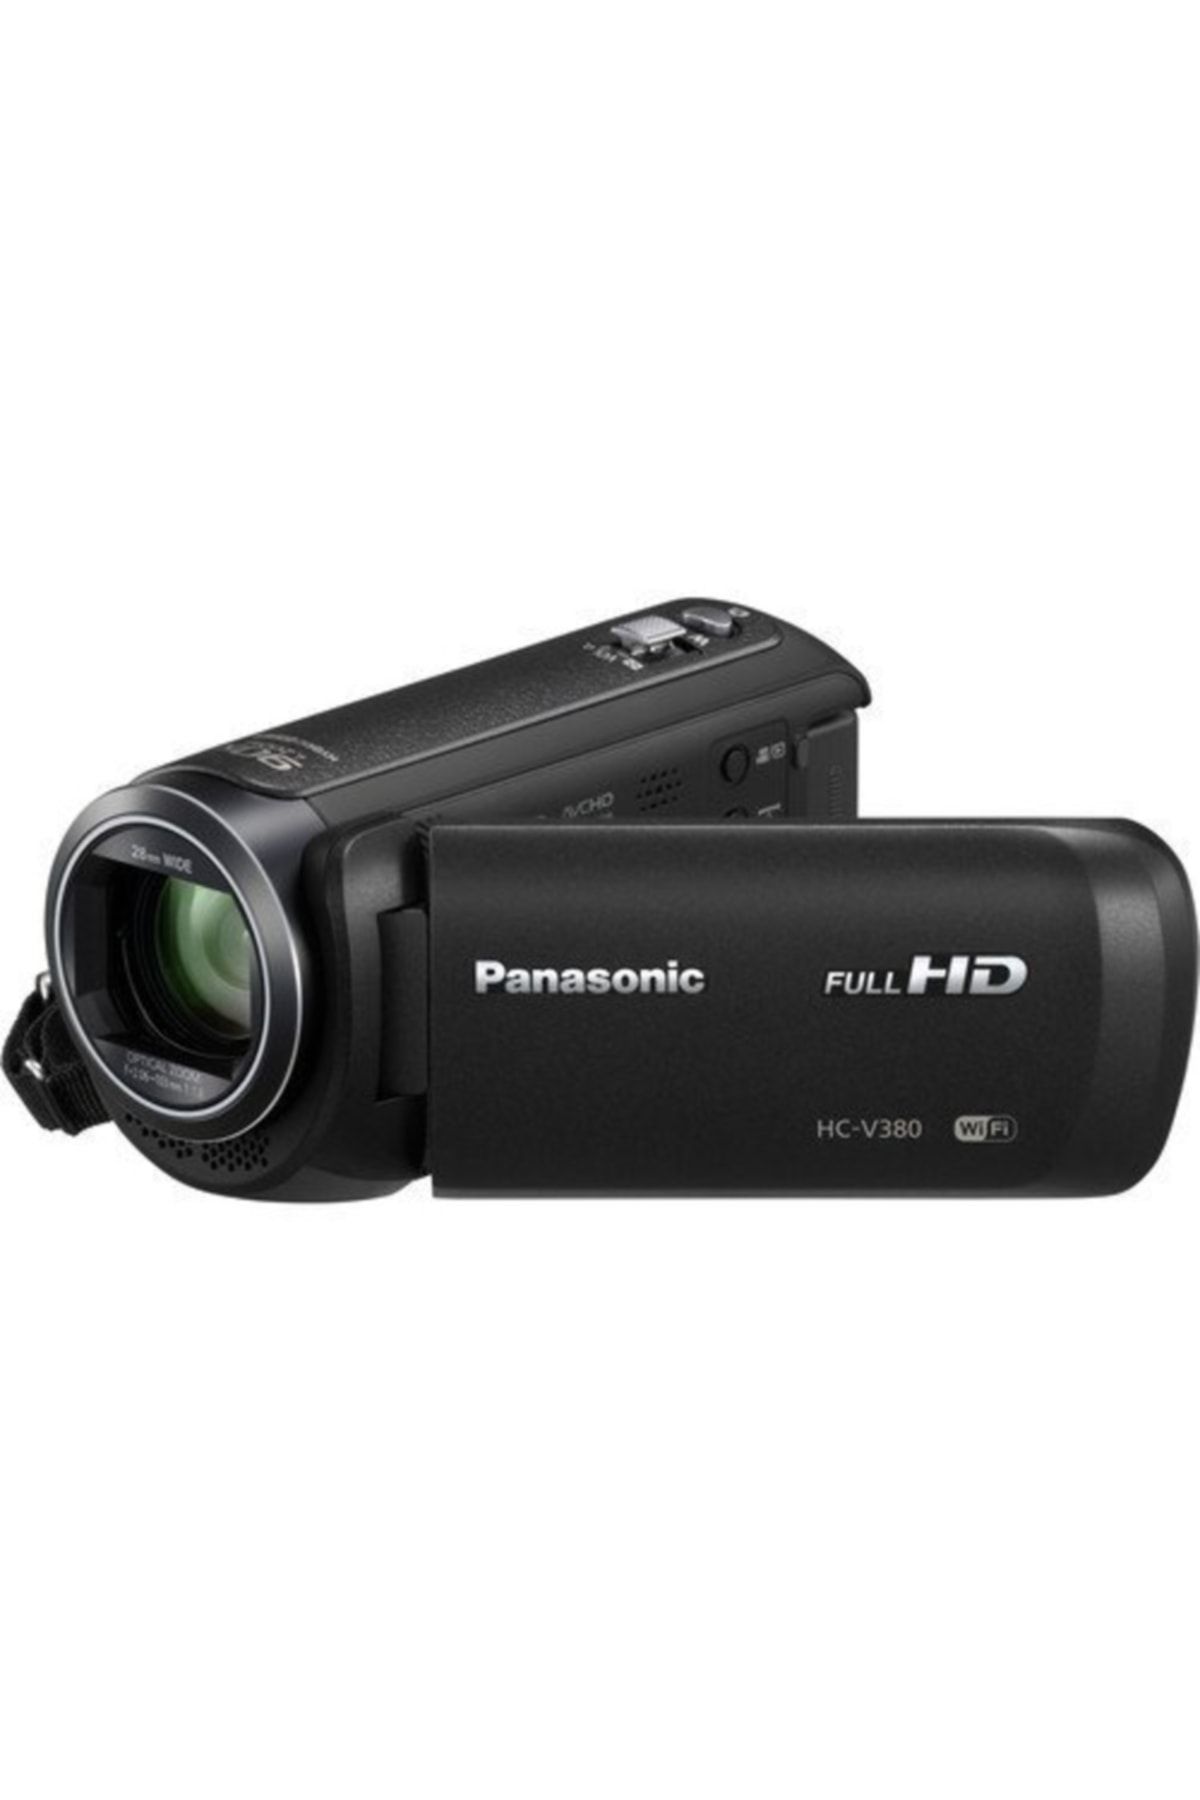 Panasonic Hc-v380k Full Hd Video Kamera (distribütör Garanti)